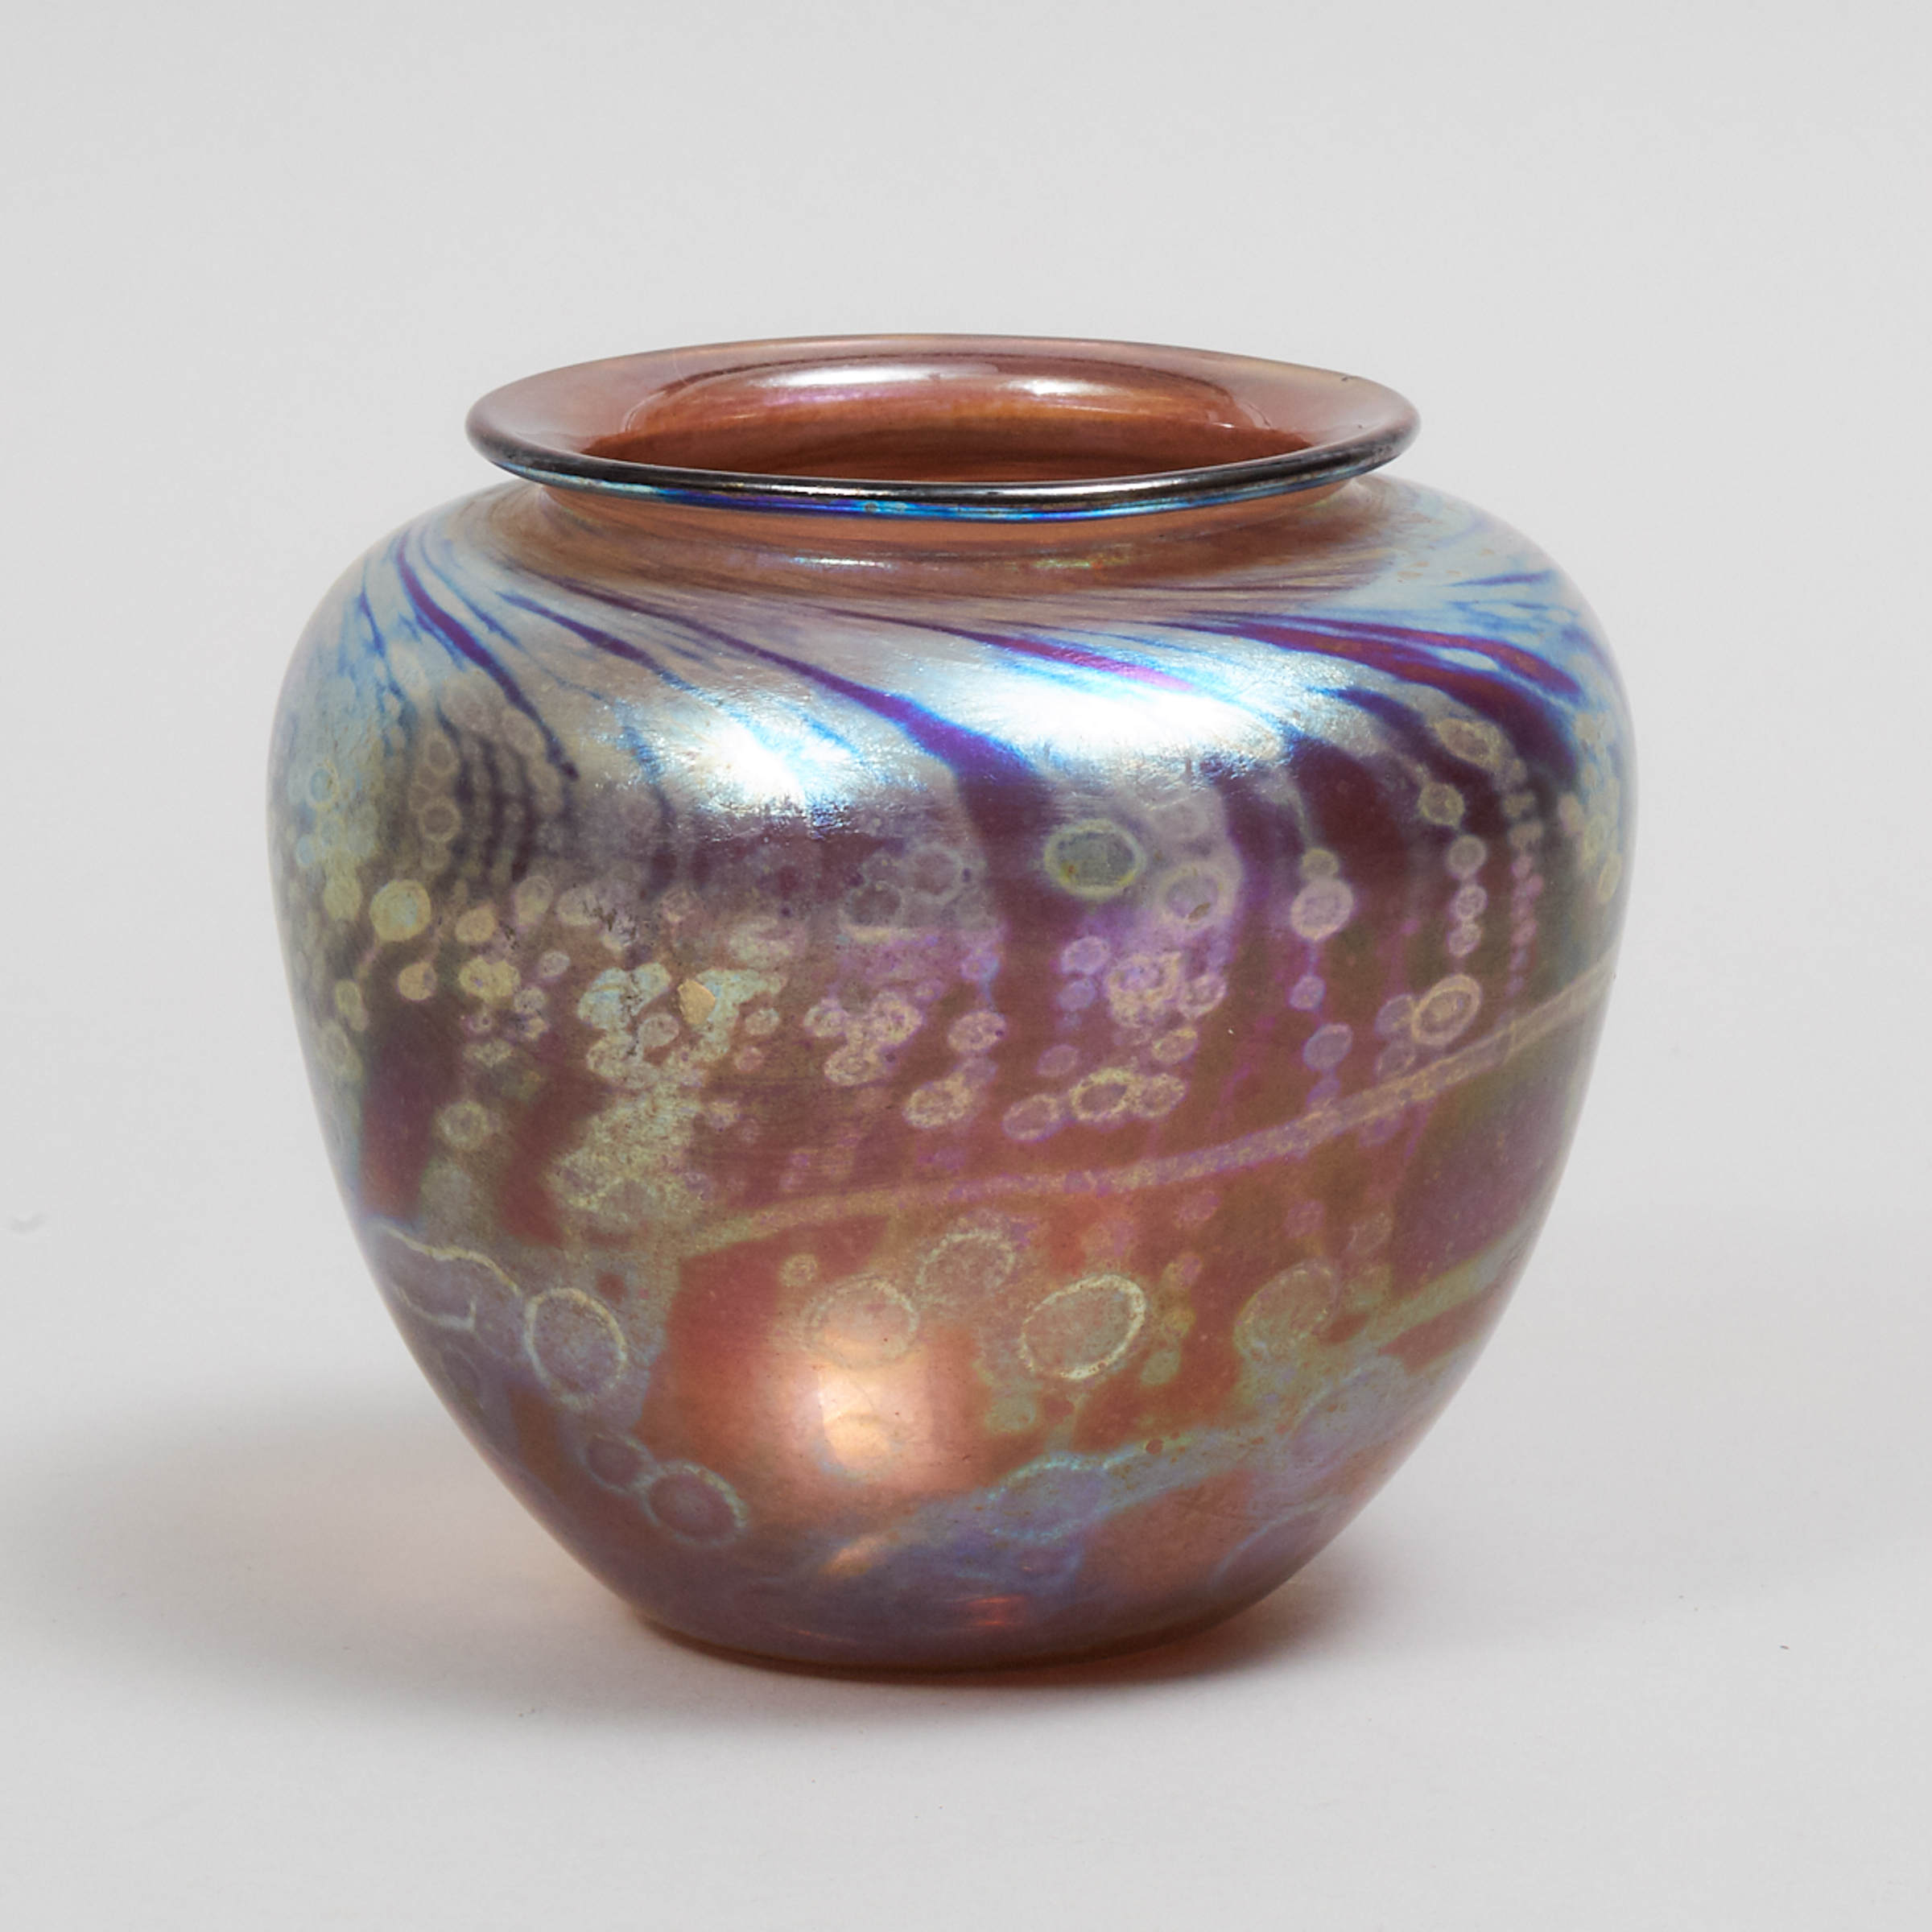 Karl Schantz (American-Canadian, b.1944), Iridescent Glass Vase, 1978